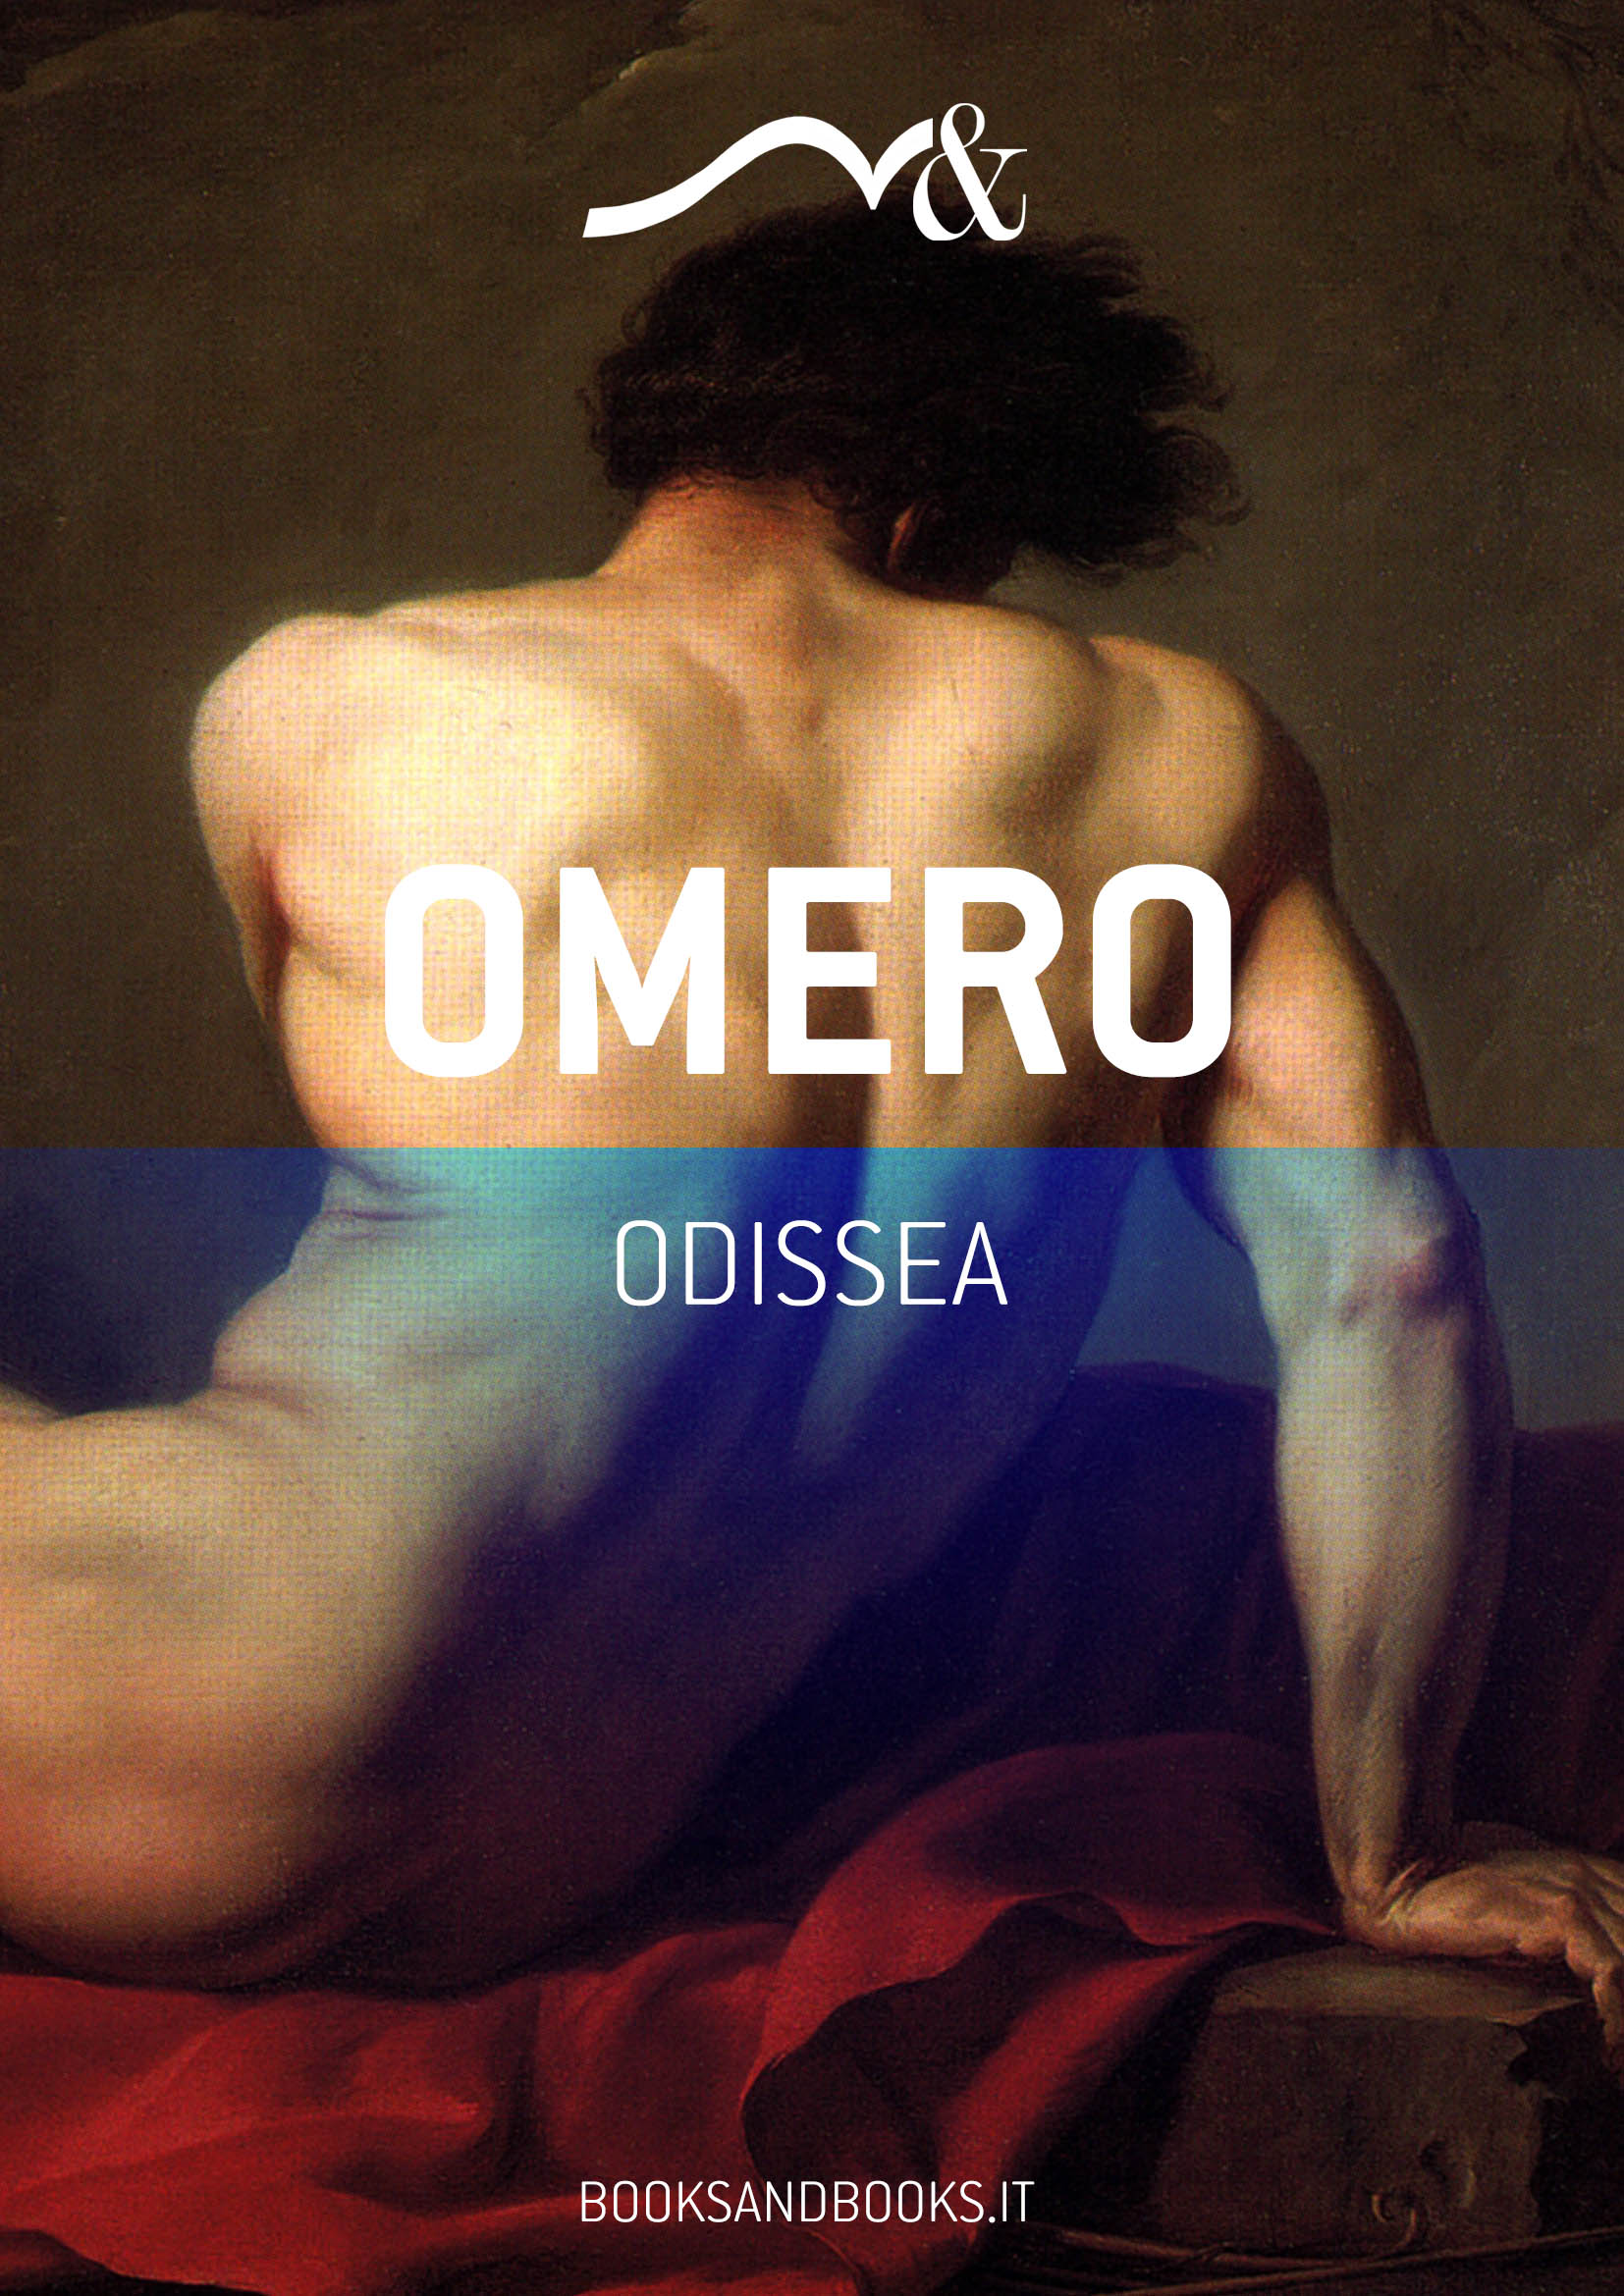 Copertina ebook - Odissea - Omero